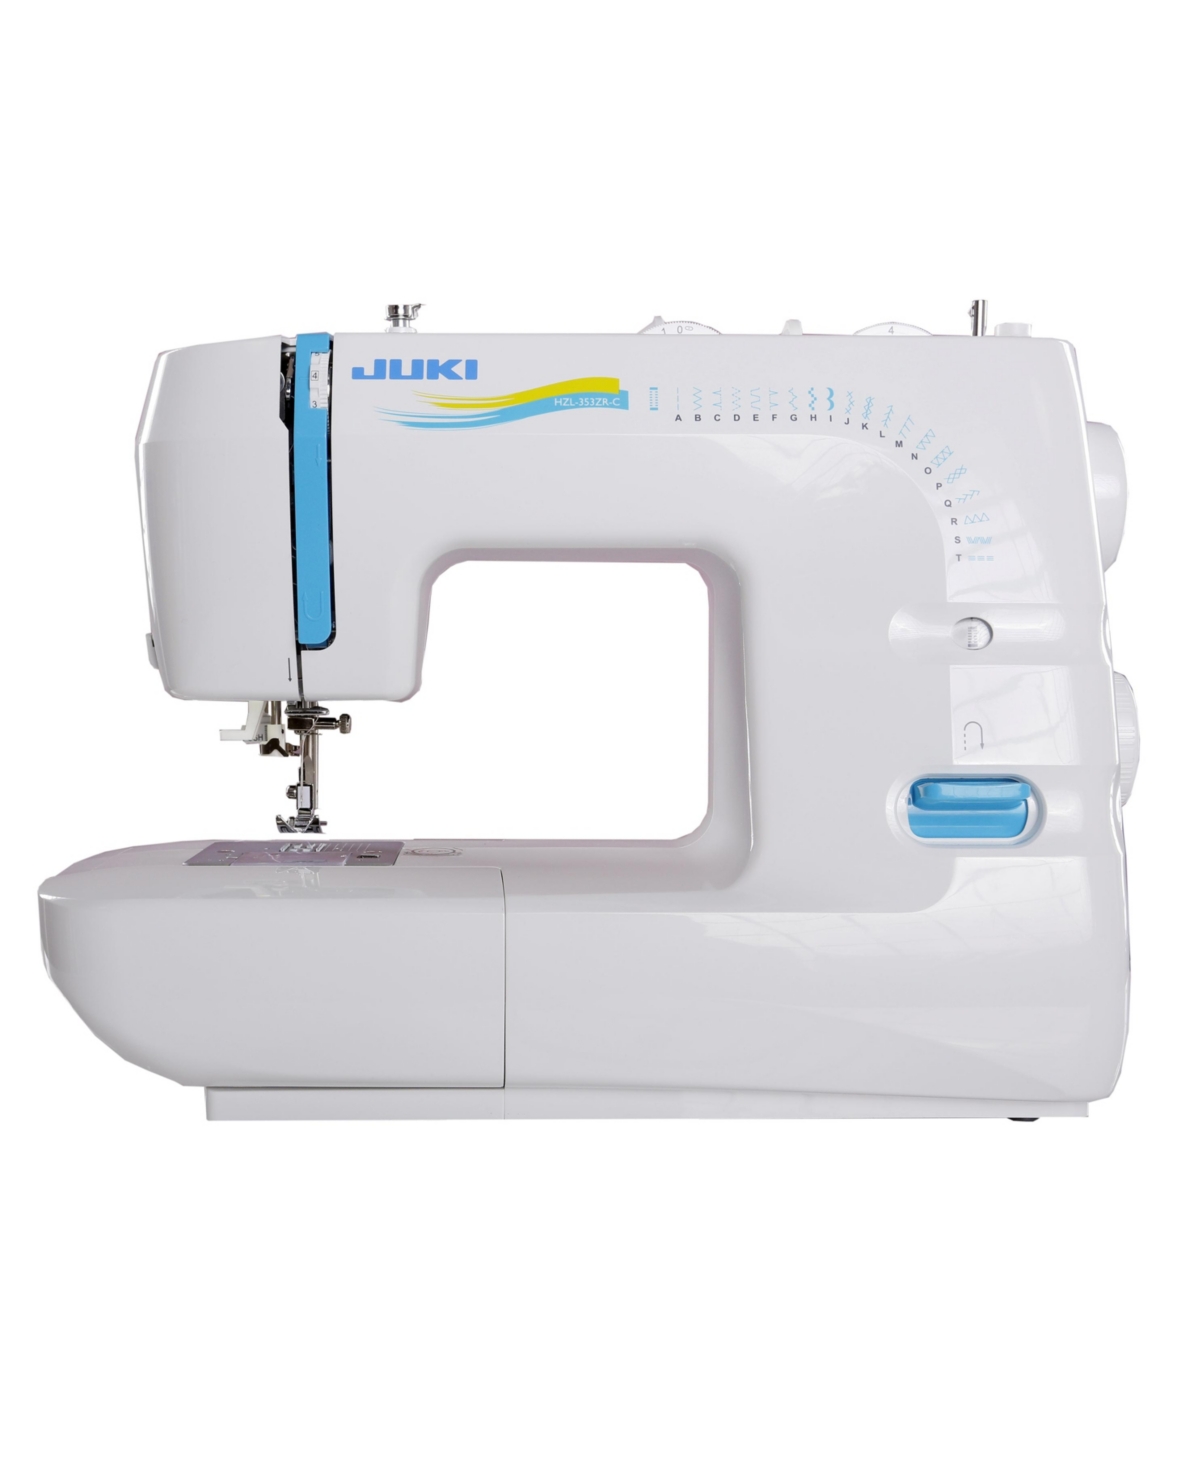 Hzl-353ZR-c Mechanical Sewing Machine - White